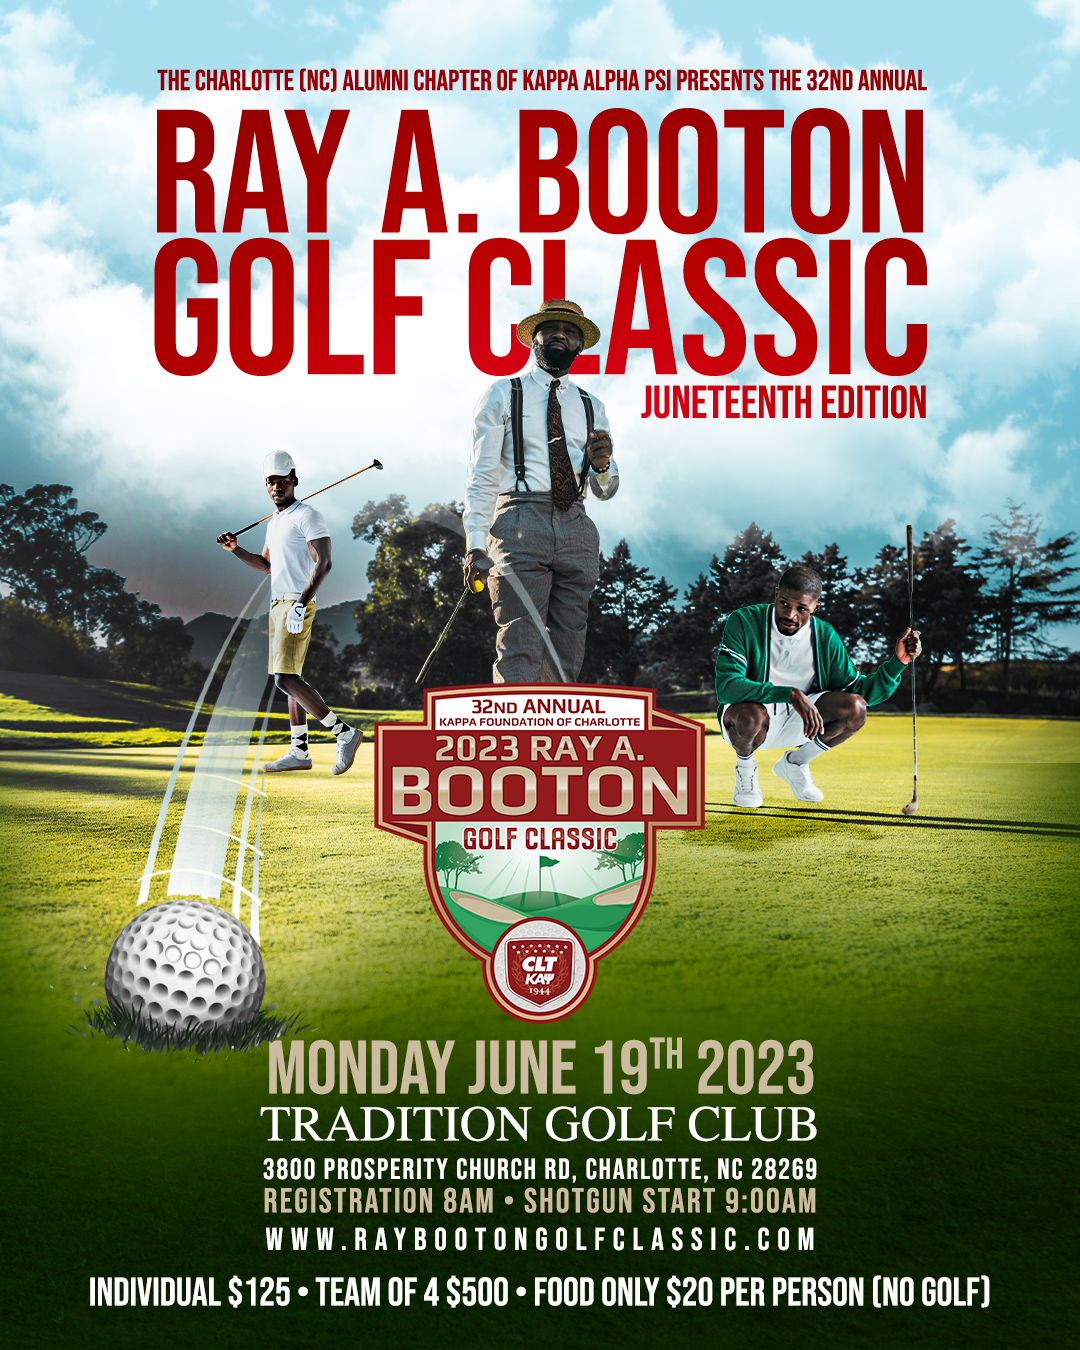 Ray Booton Golf Classic Kappa Foundation of CHARLOTTE